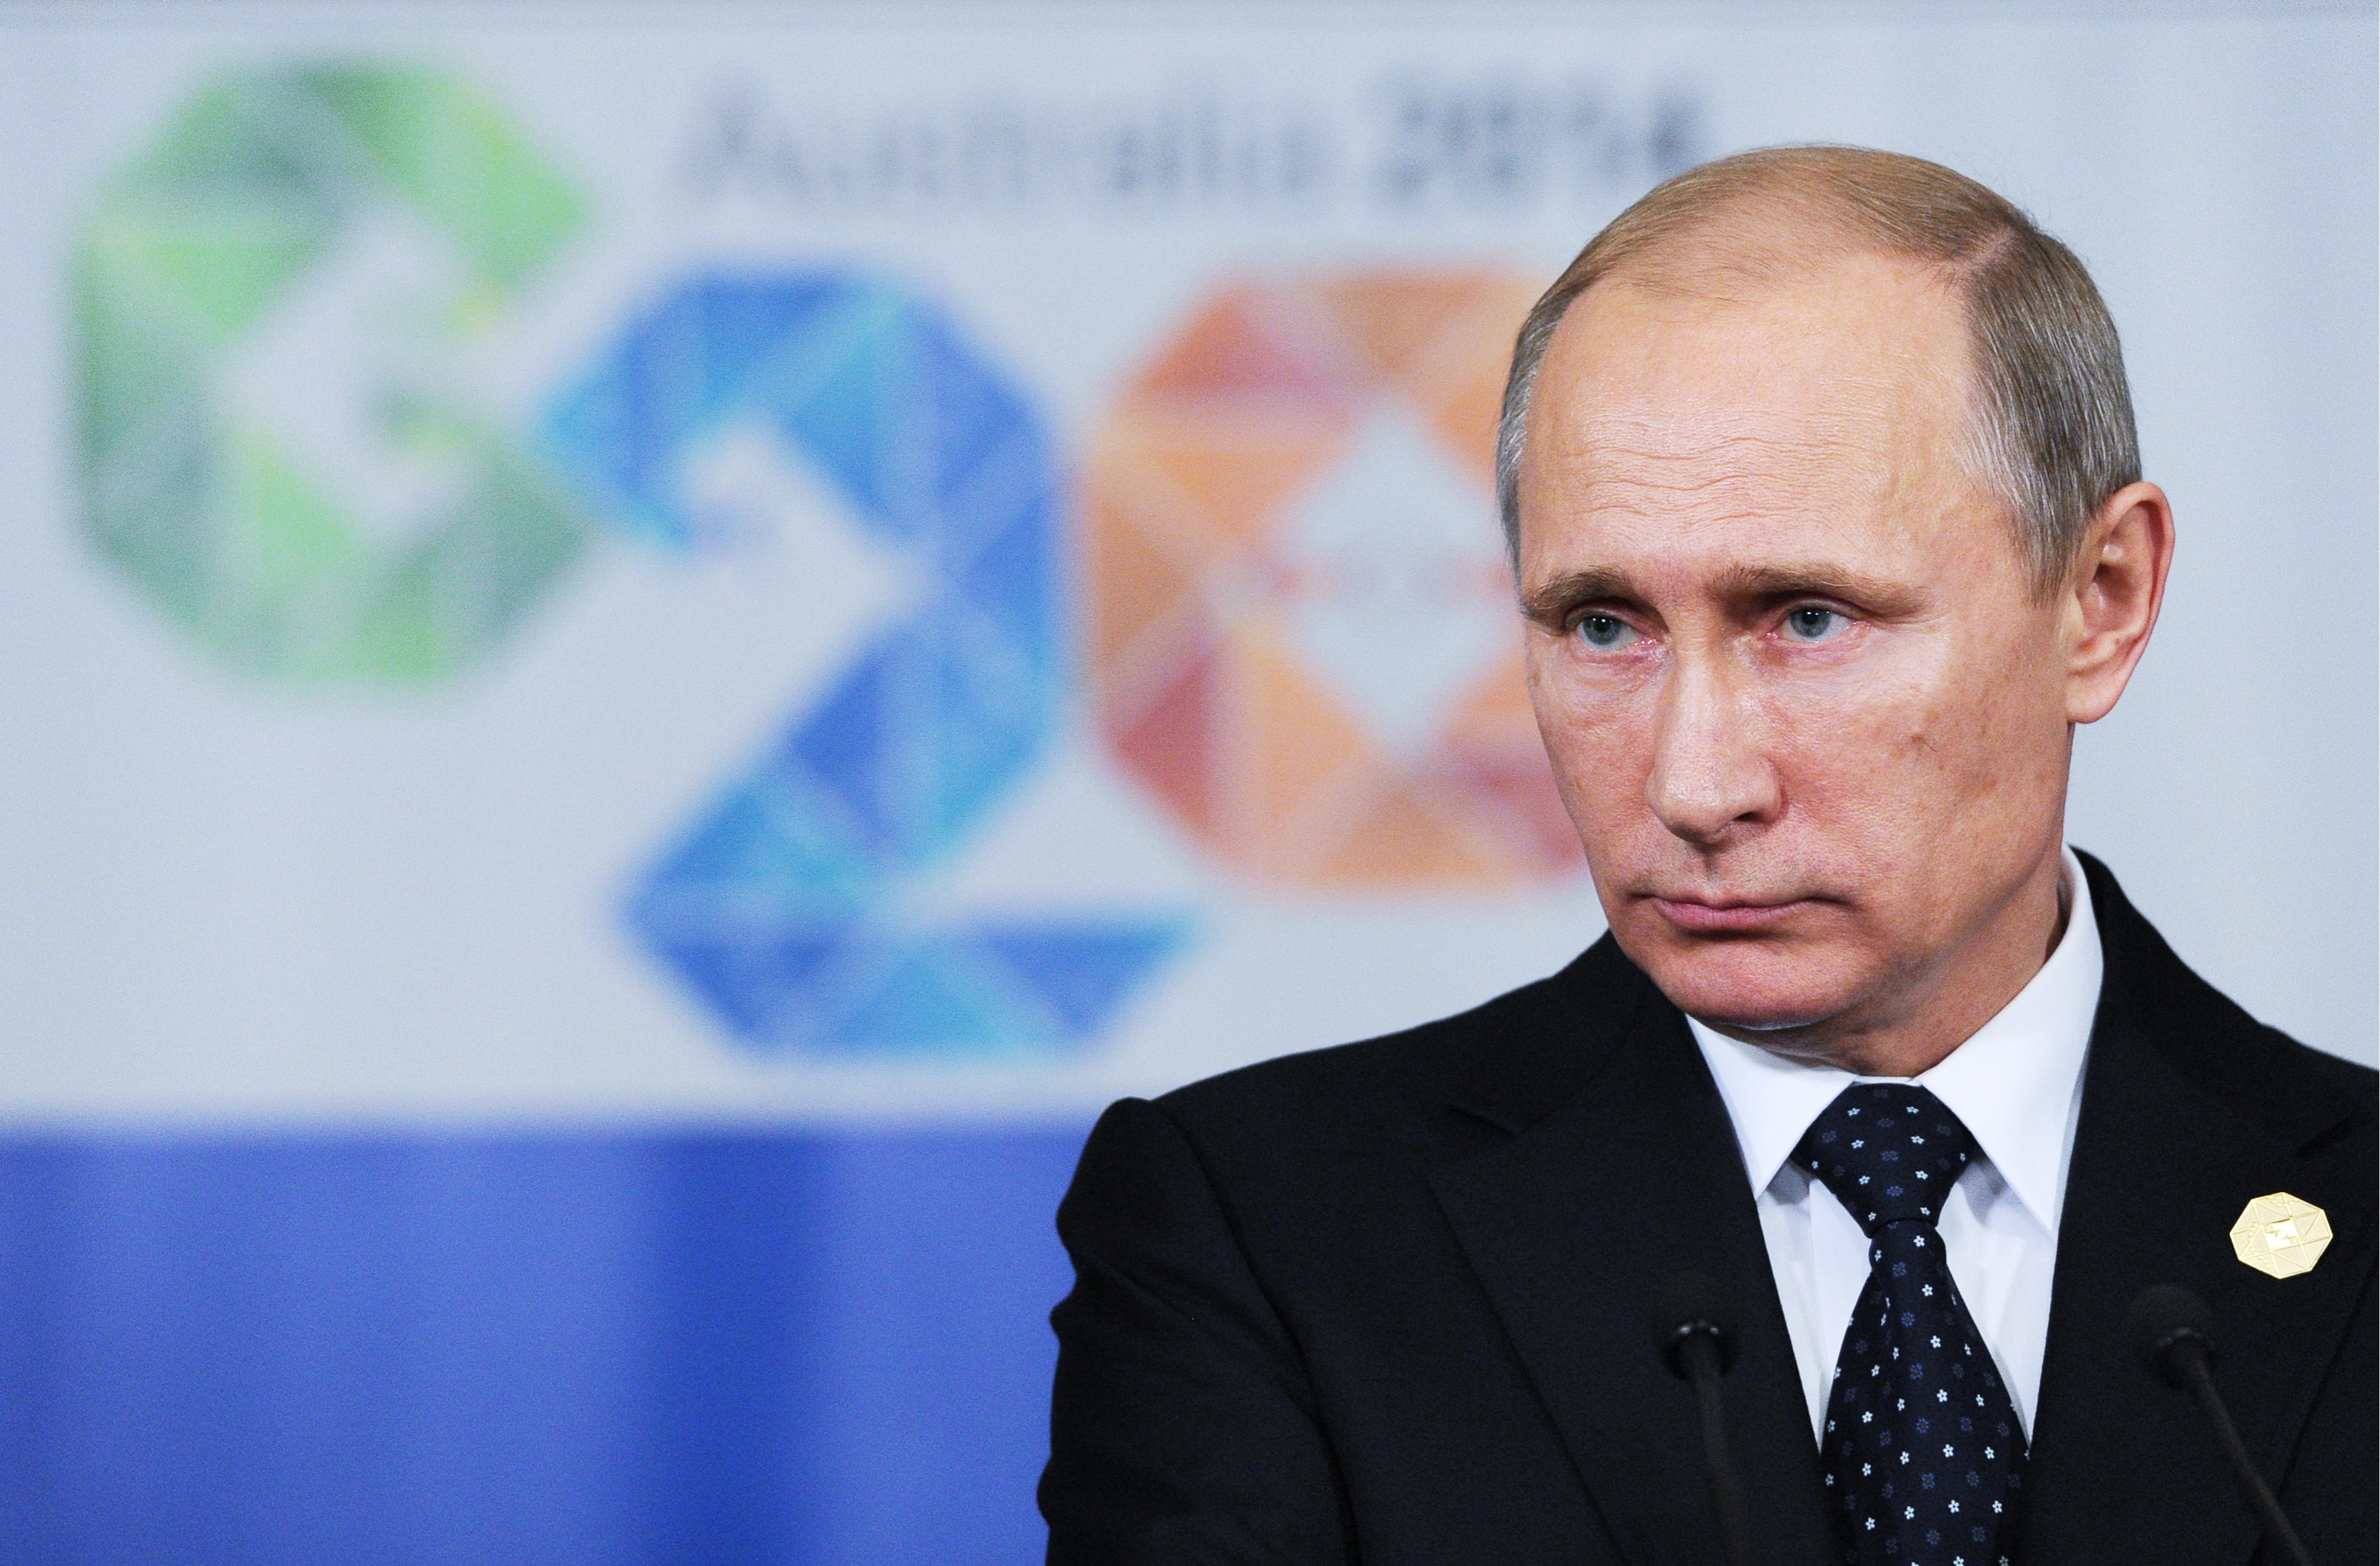 Russia's President Vladimir Putin looks on at a press conference following the G20 Leaders' Summit in Brisbane, Australia. (Klimentyev Mikhail—EPA)